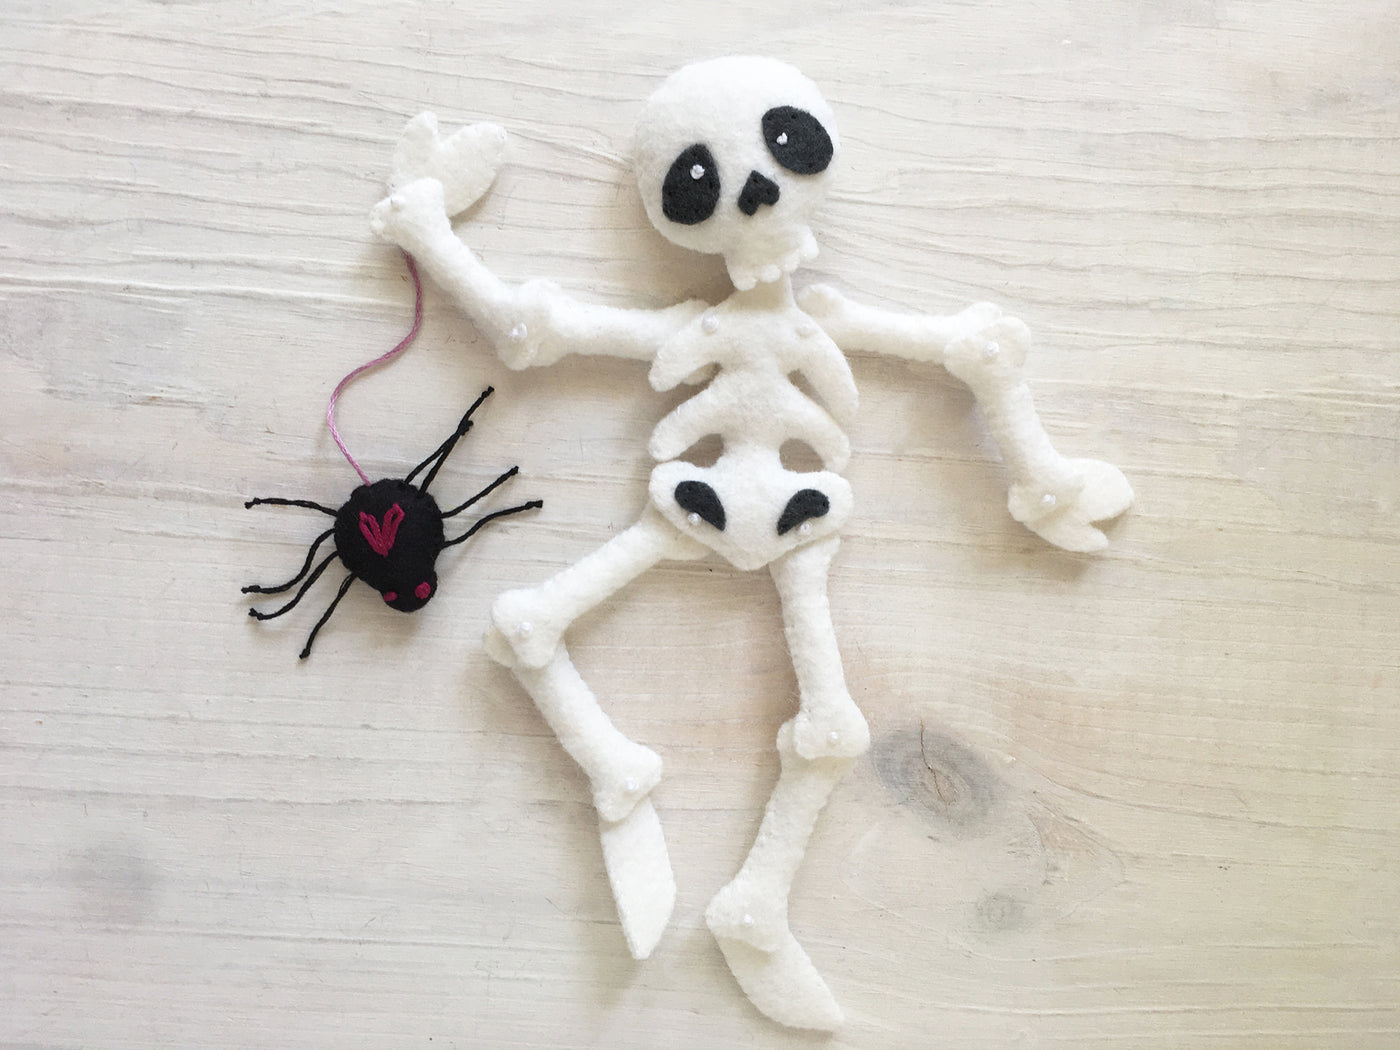 halloween skeleton pattern